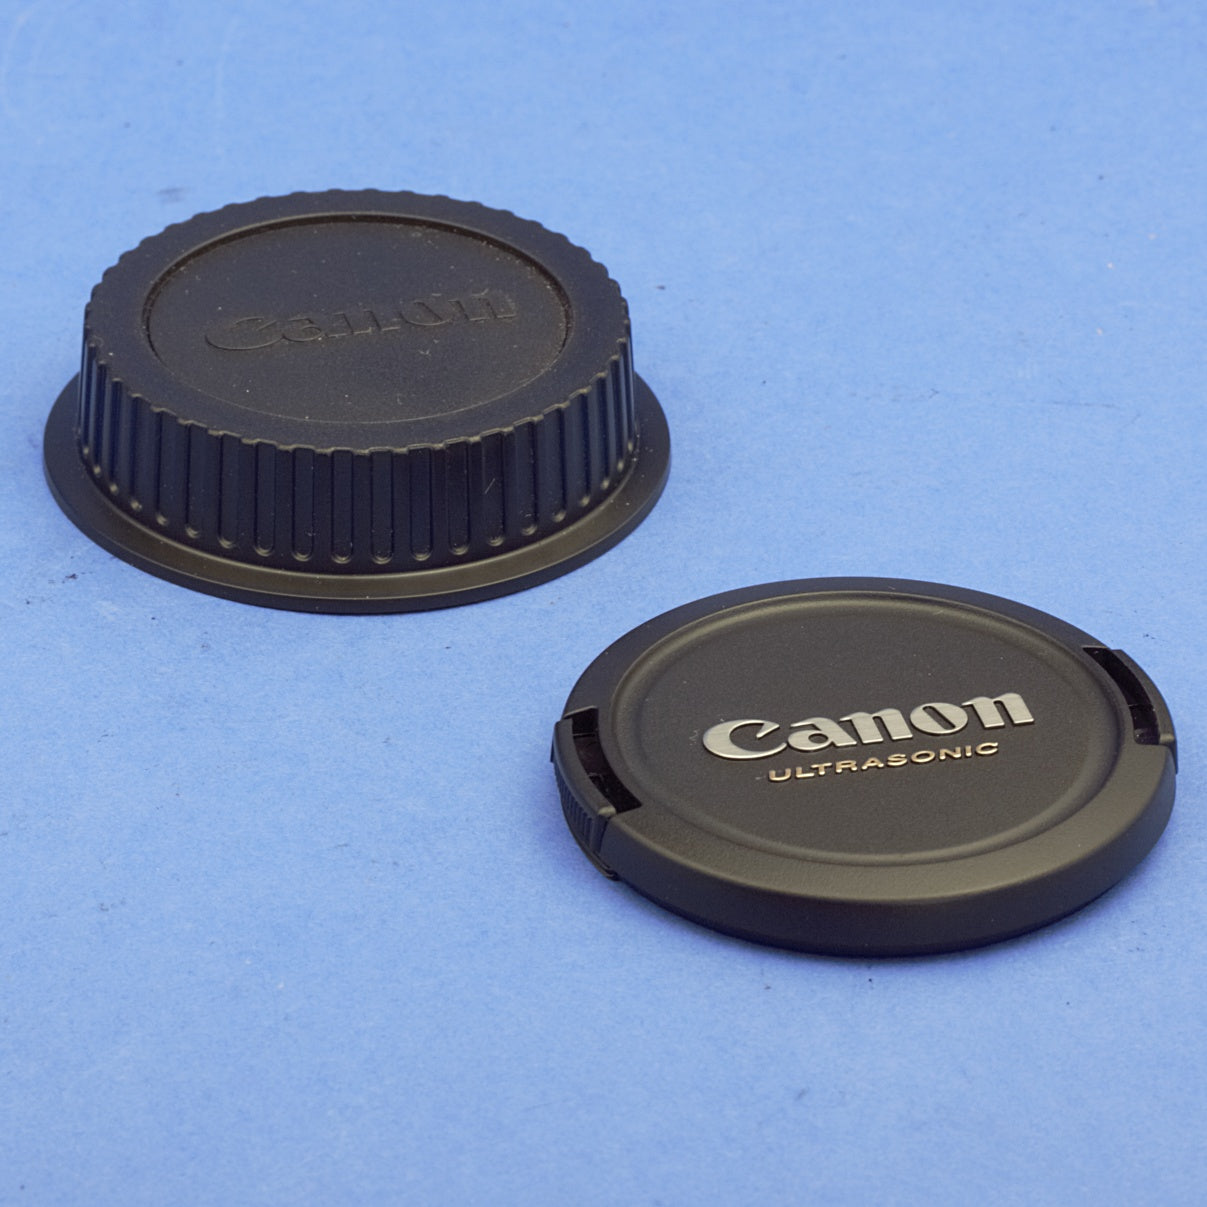 Canon EF 100mm 2.8 USM Macro Lens Mint Condition